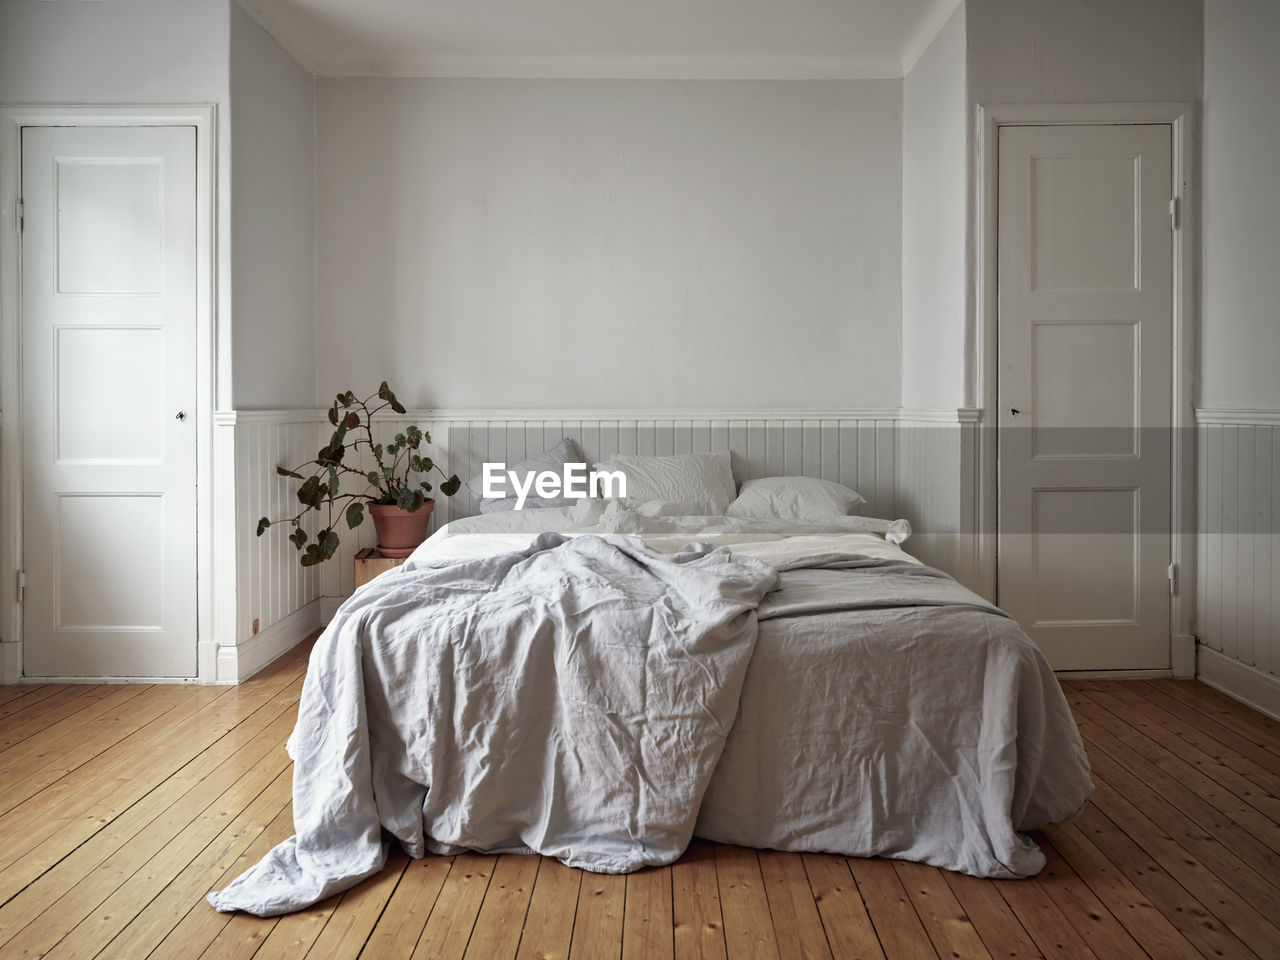 View of bed in bedroom